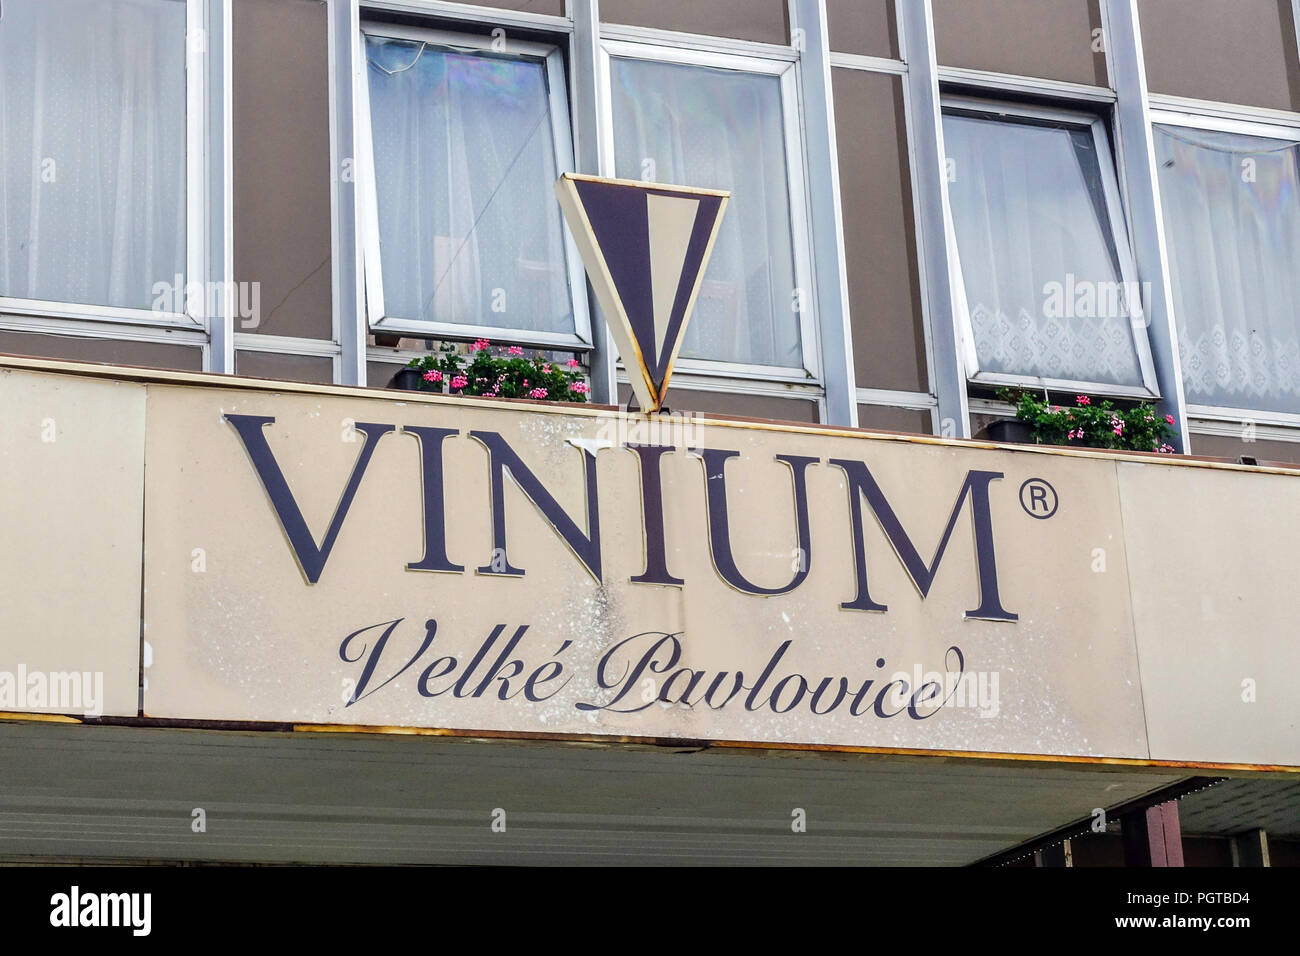 Vinium, winery, logo sign, Velke Pavlovice, Czech Republic Stock Photo